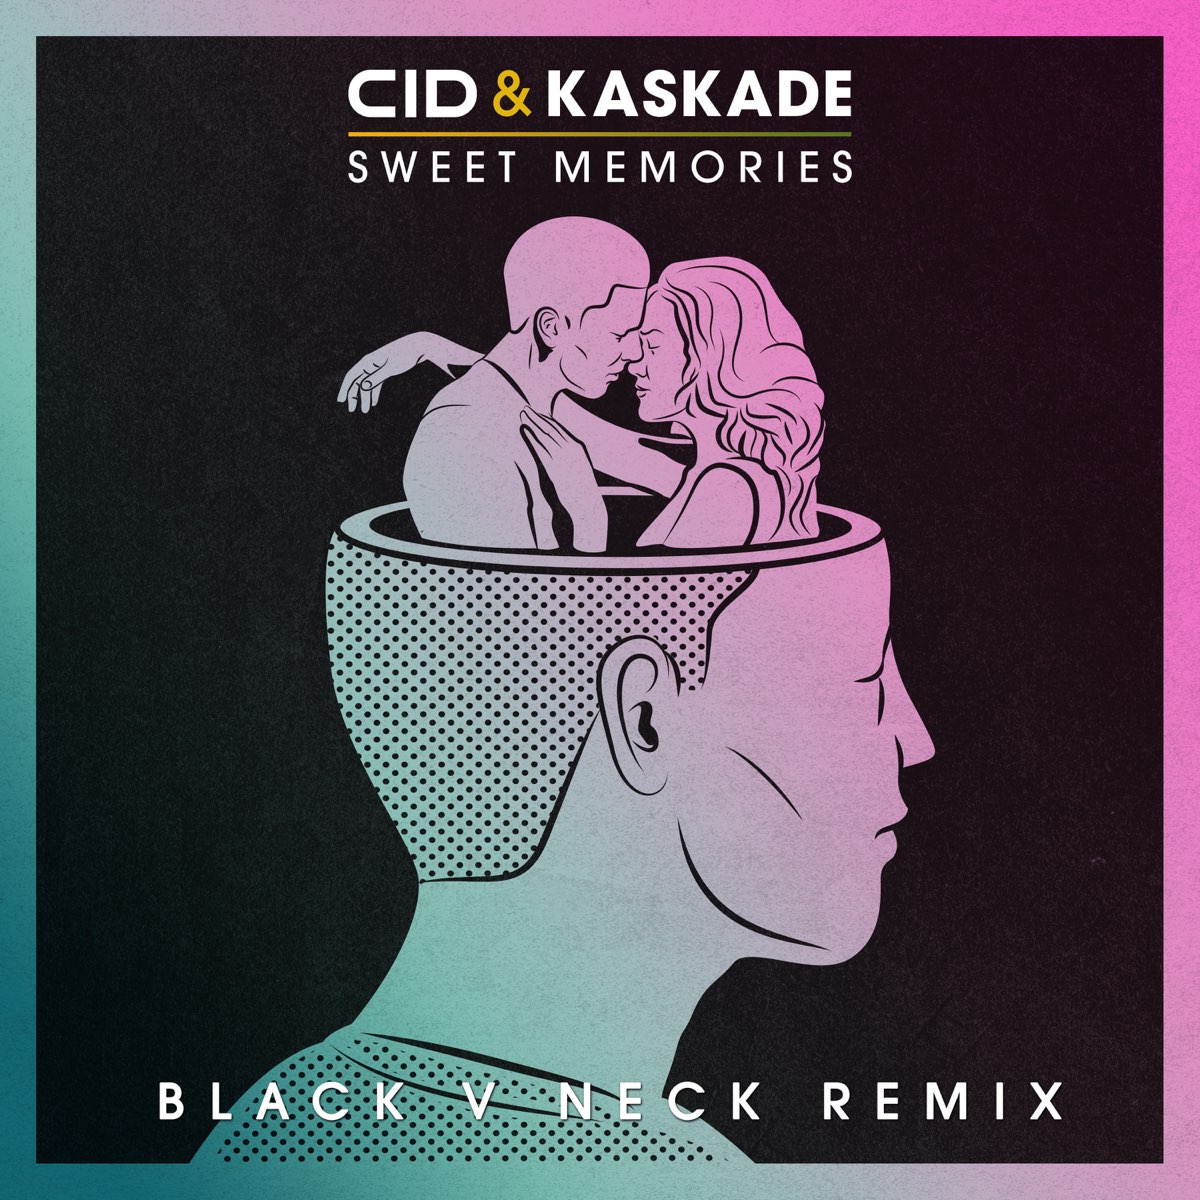 Sweet Memories (Black V Neck Remix) - Single by CID, Kaskade & Black V Neck  on Apple Music